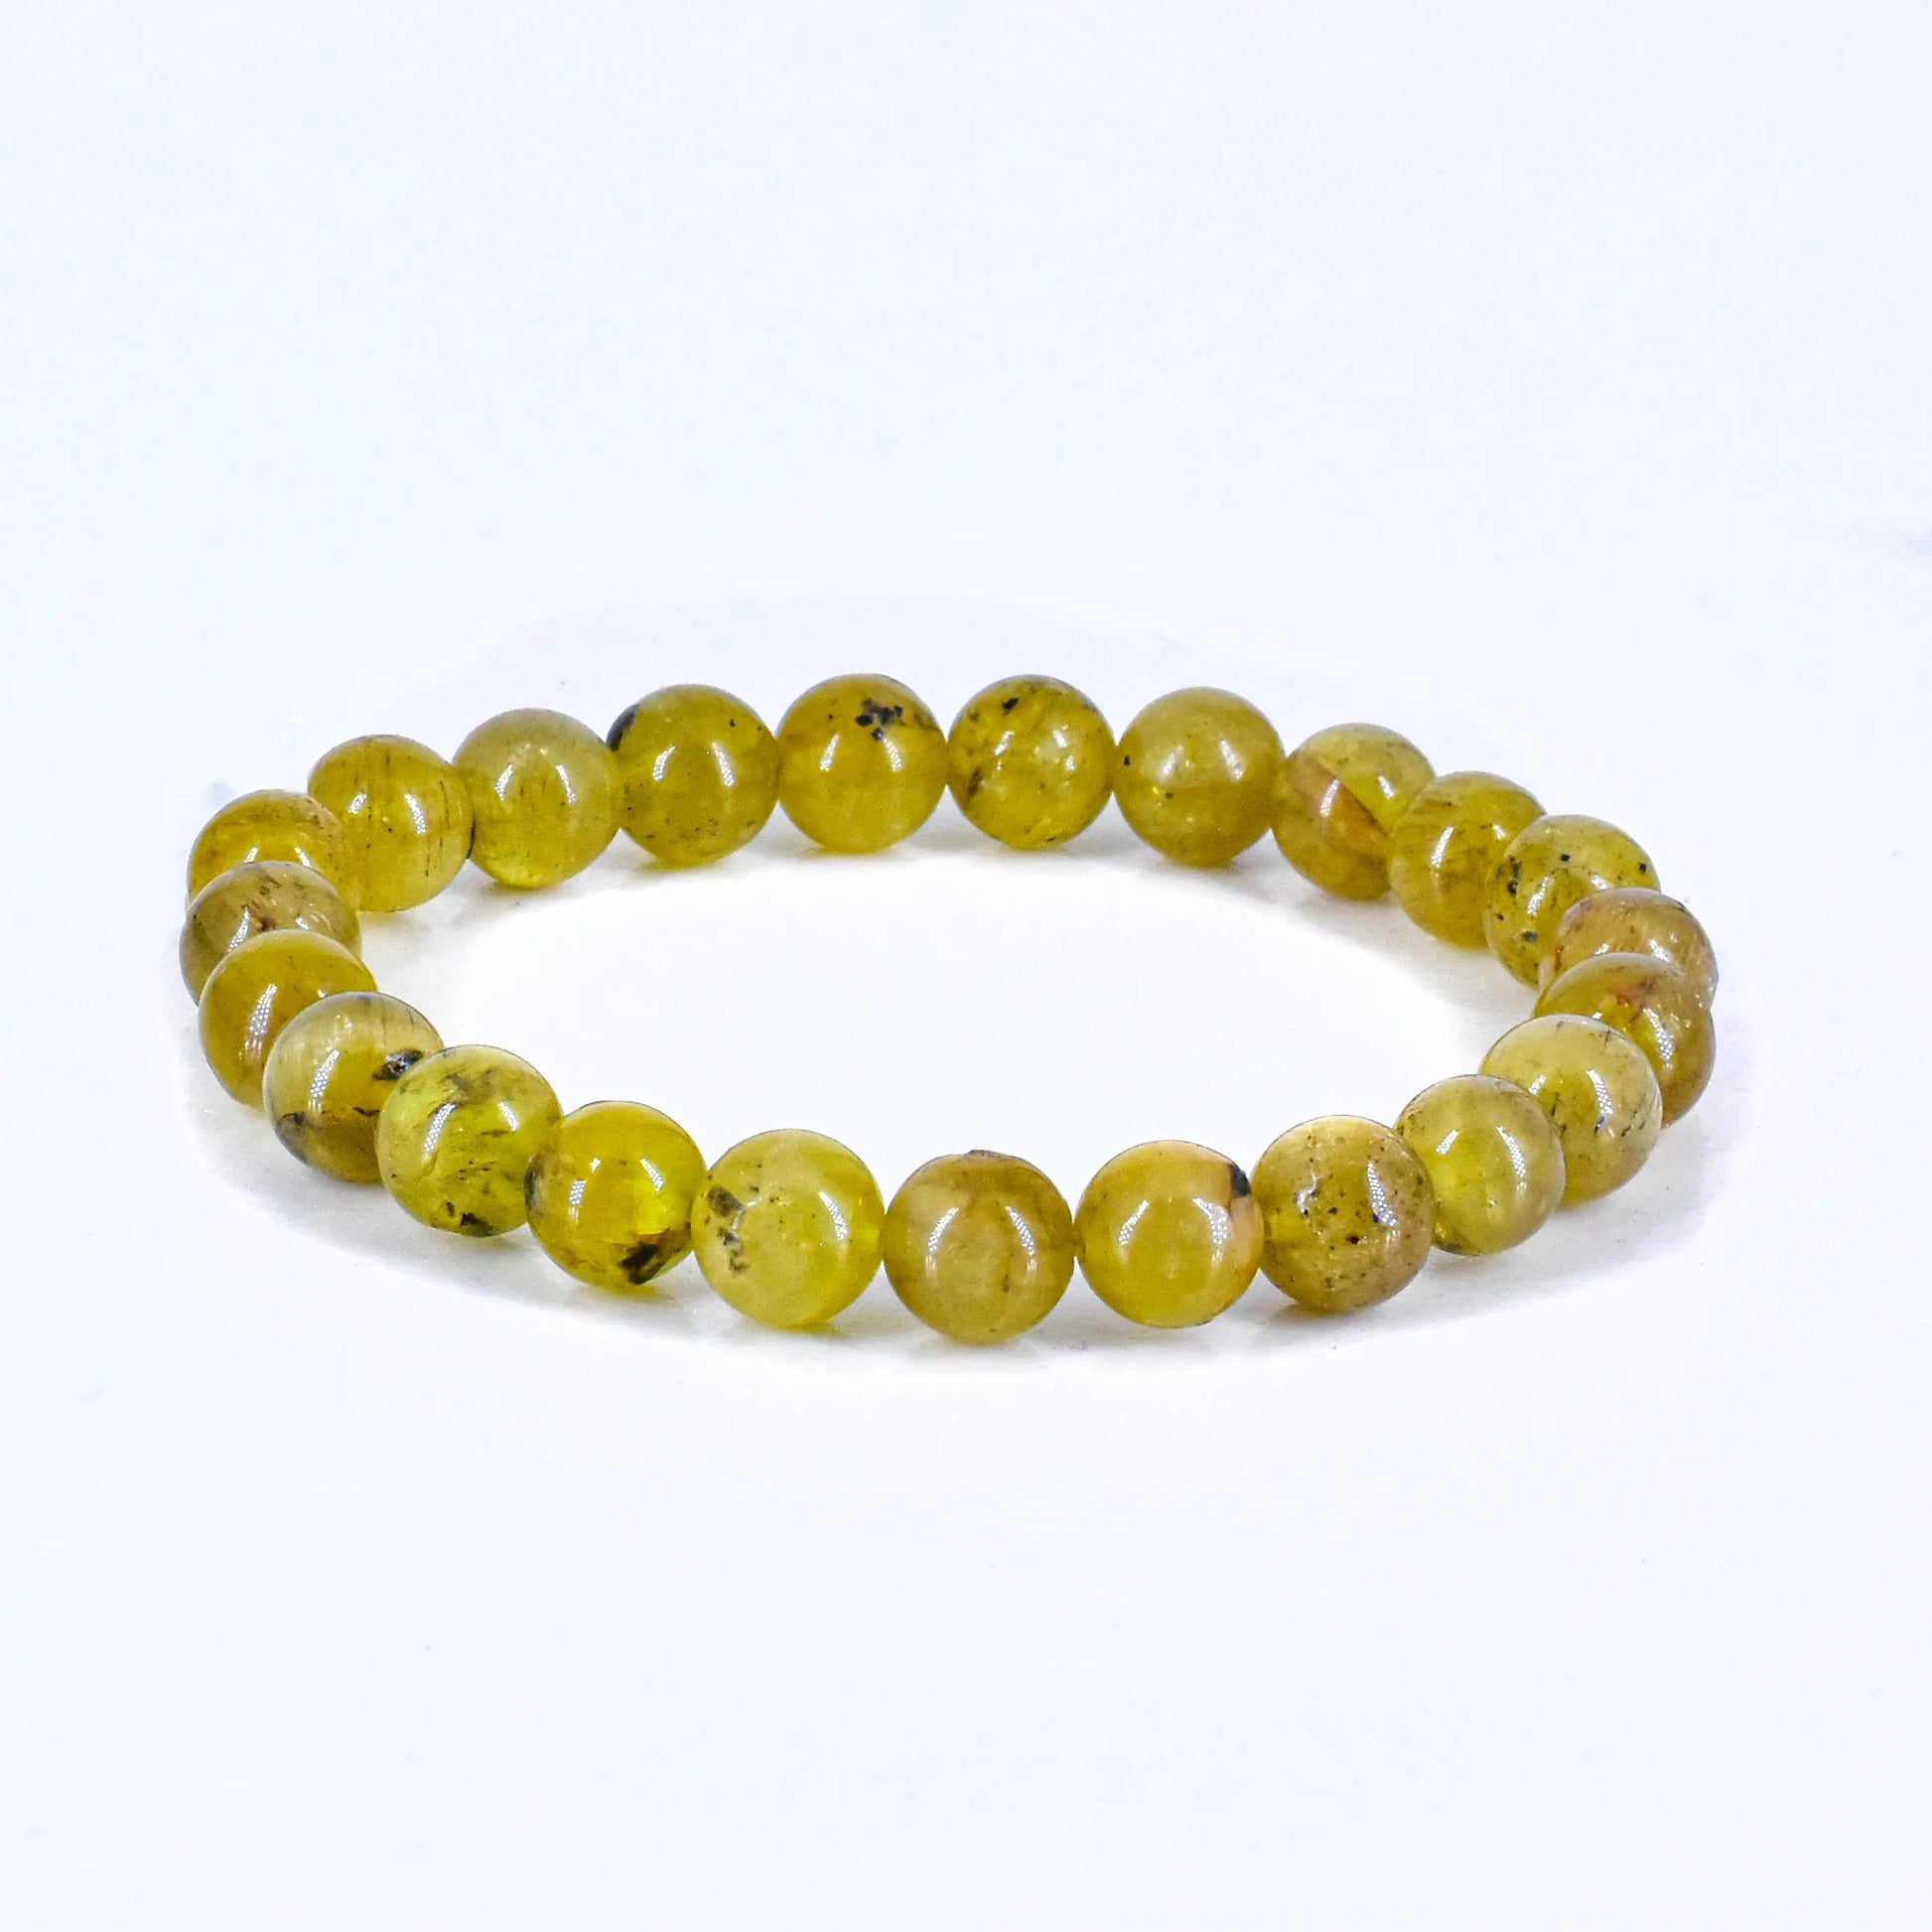 YellowApatite Crystal Stone Bracelet for Positivity